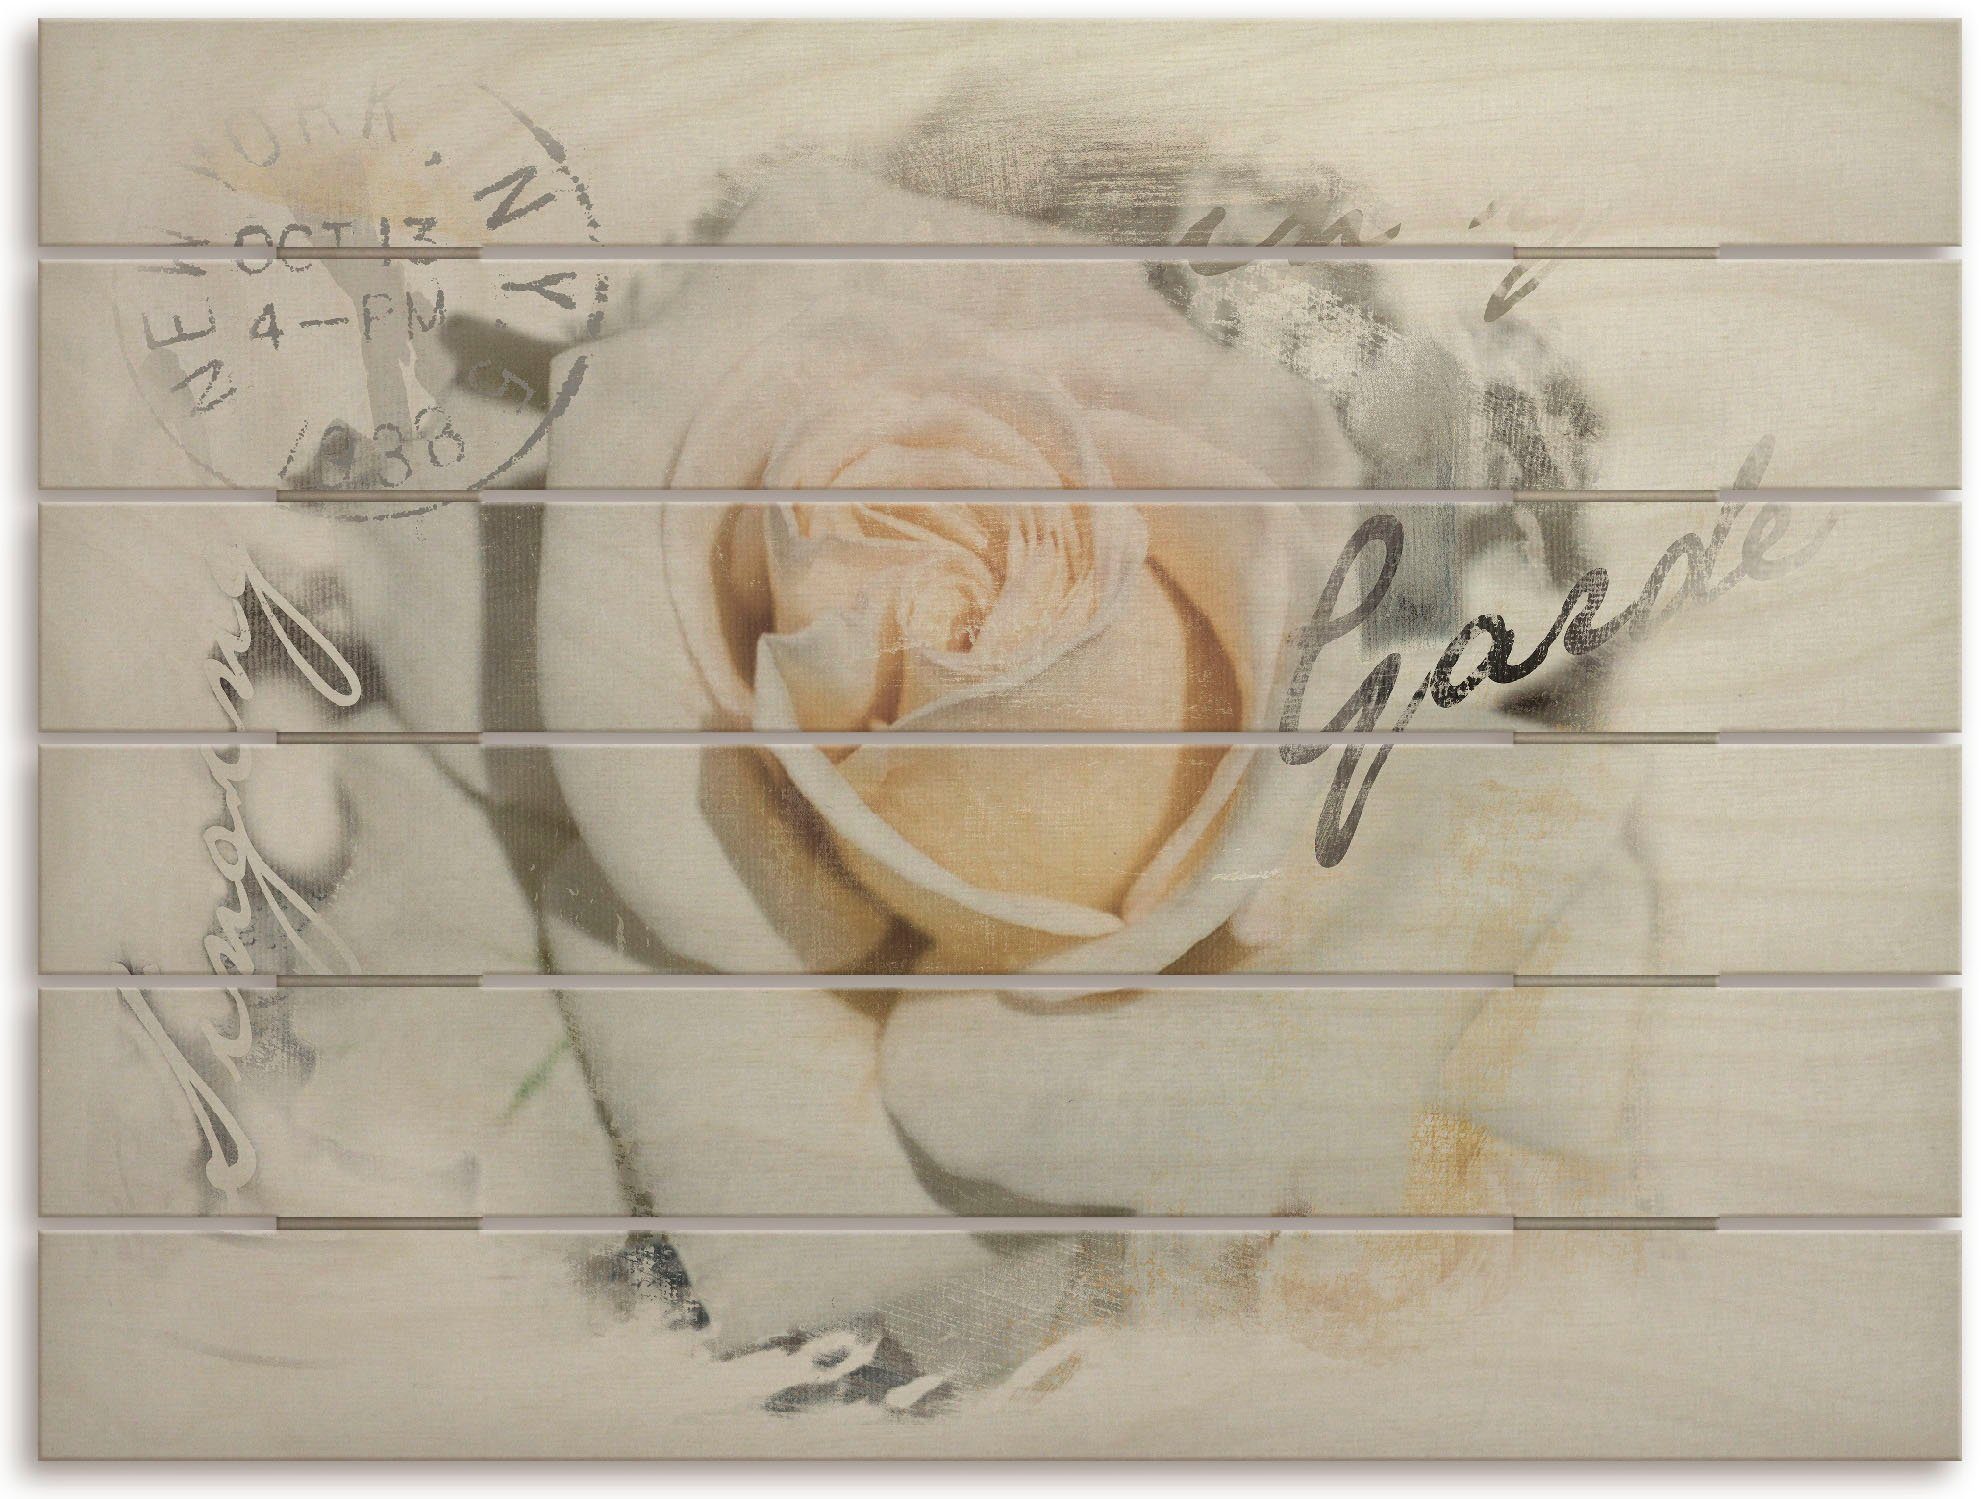 Artland Holzbild In Buchstaben - Rose, Blumenbilder (1 St)